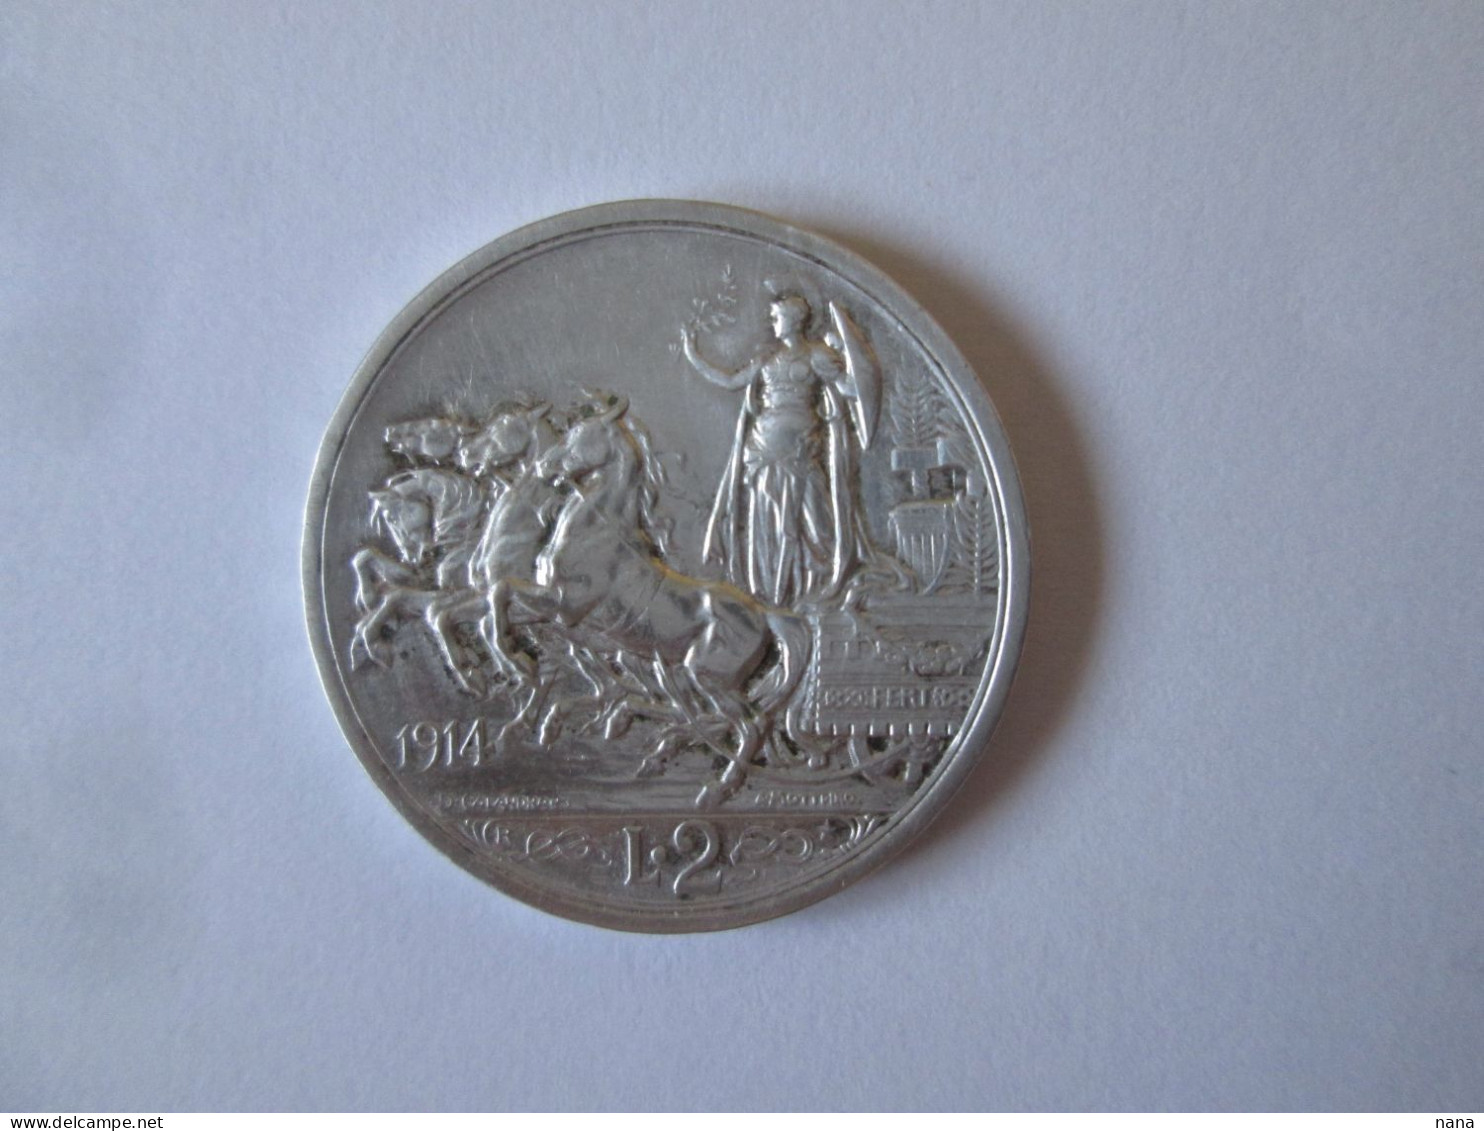 Italie 2 Lire 1914 Argent Tres Belle Piece/Italy 2 Lire 1914 Silver Very Nice Coin - 1900-1946 : Víctor Emmanuel III & Umberto II